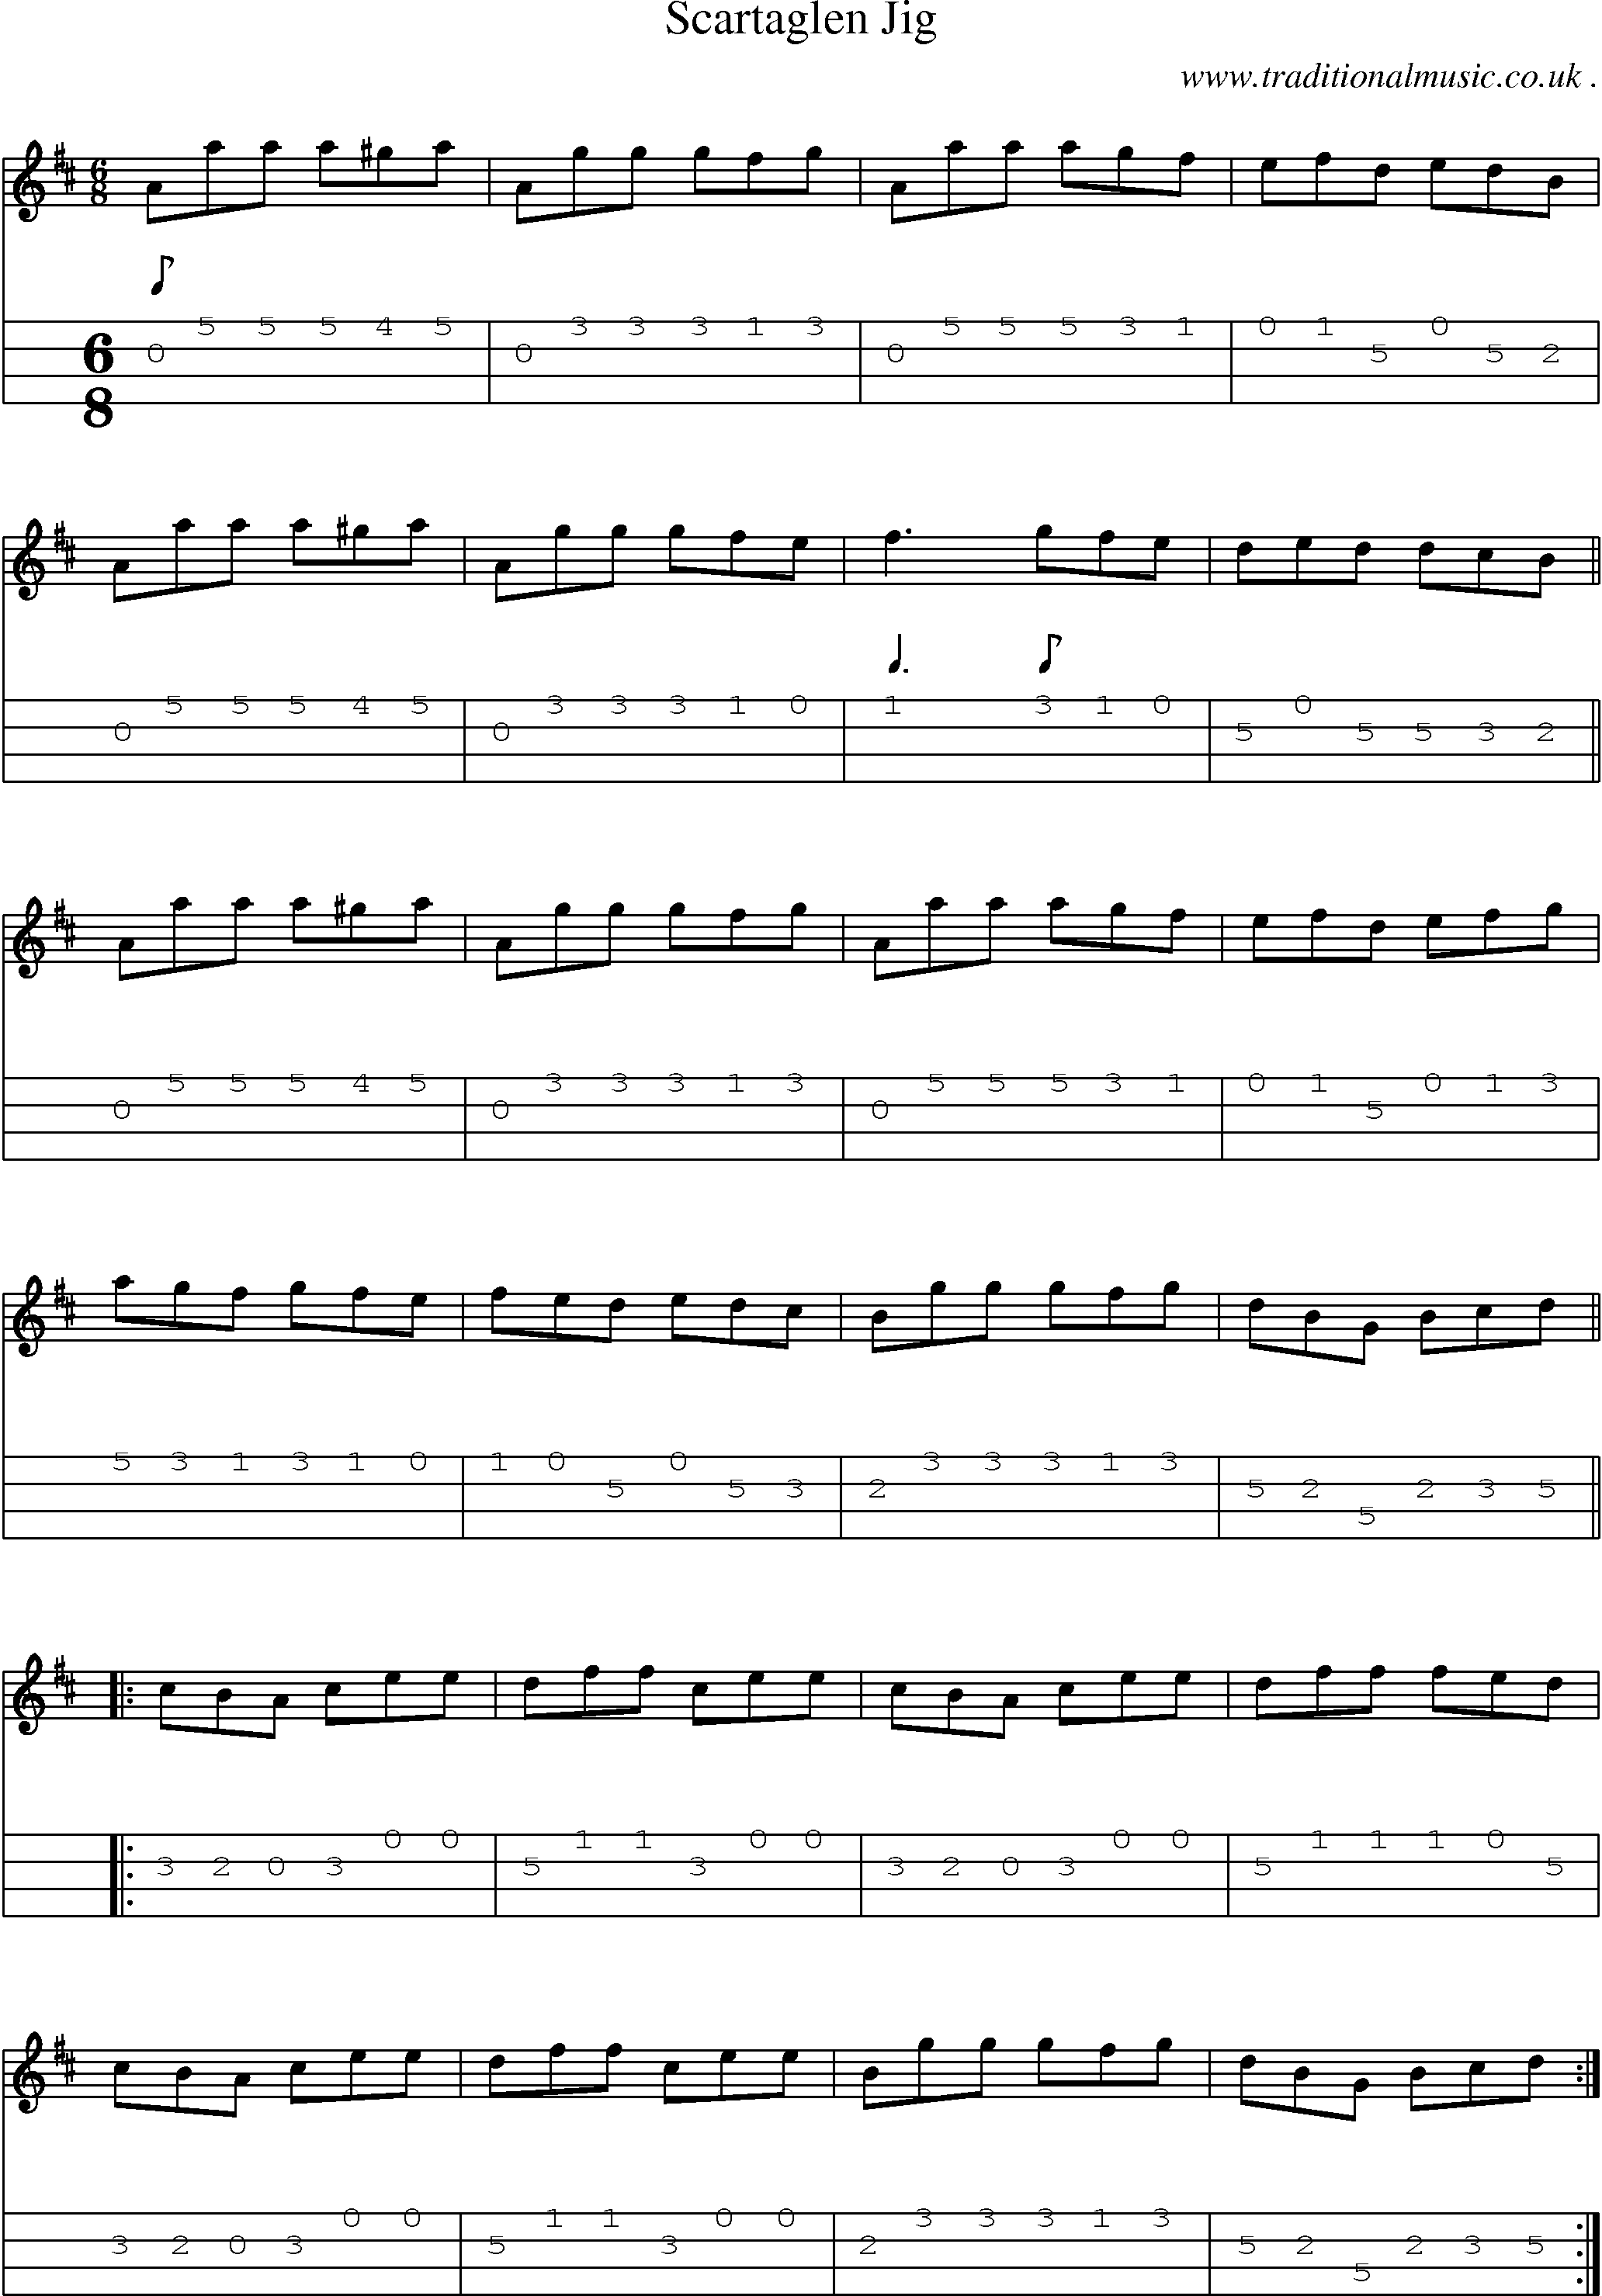 Sheet-Music and Mandolin Tabs for Scartaglen Jig